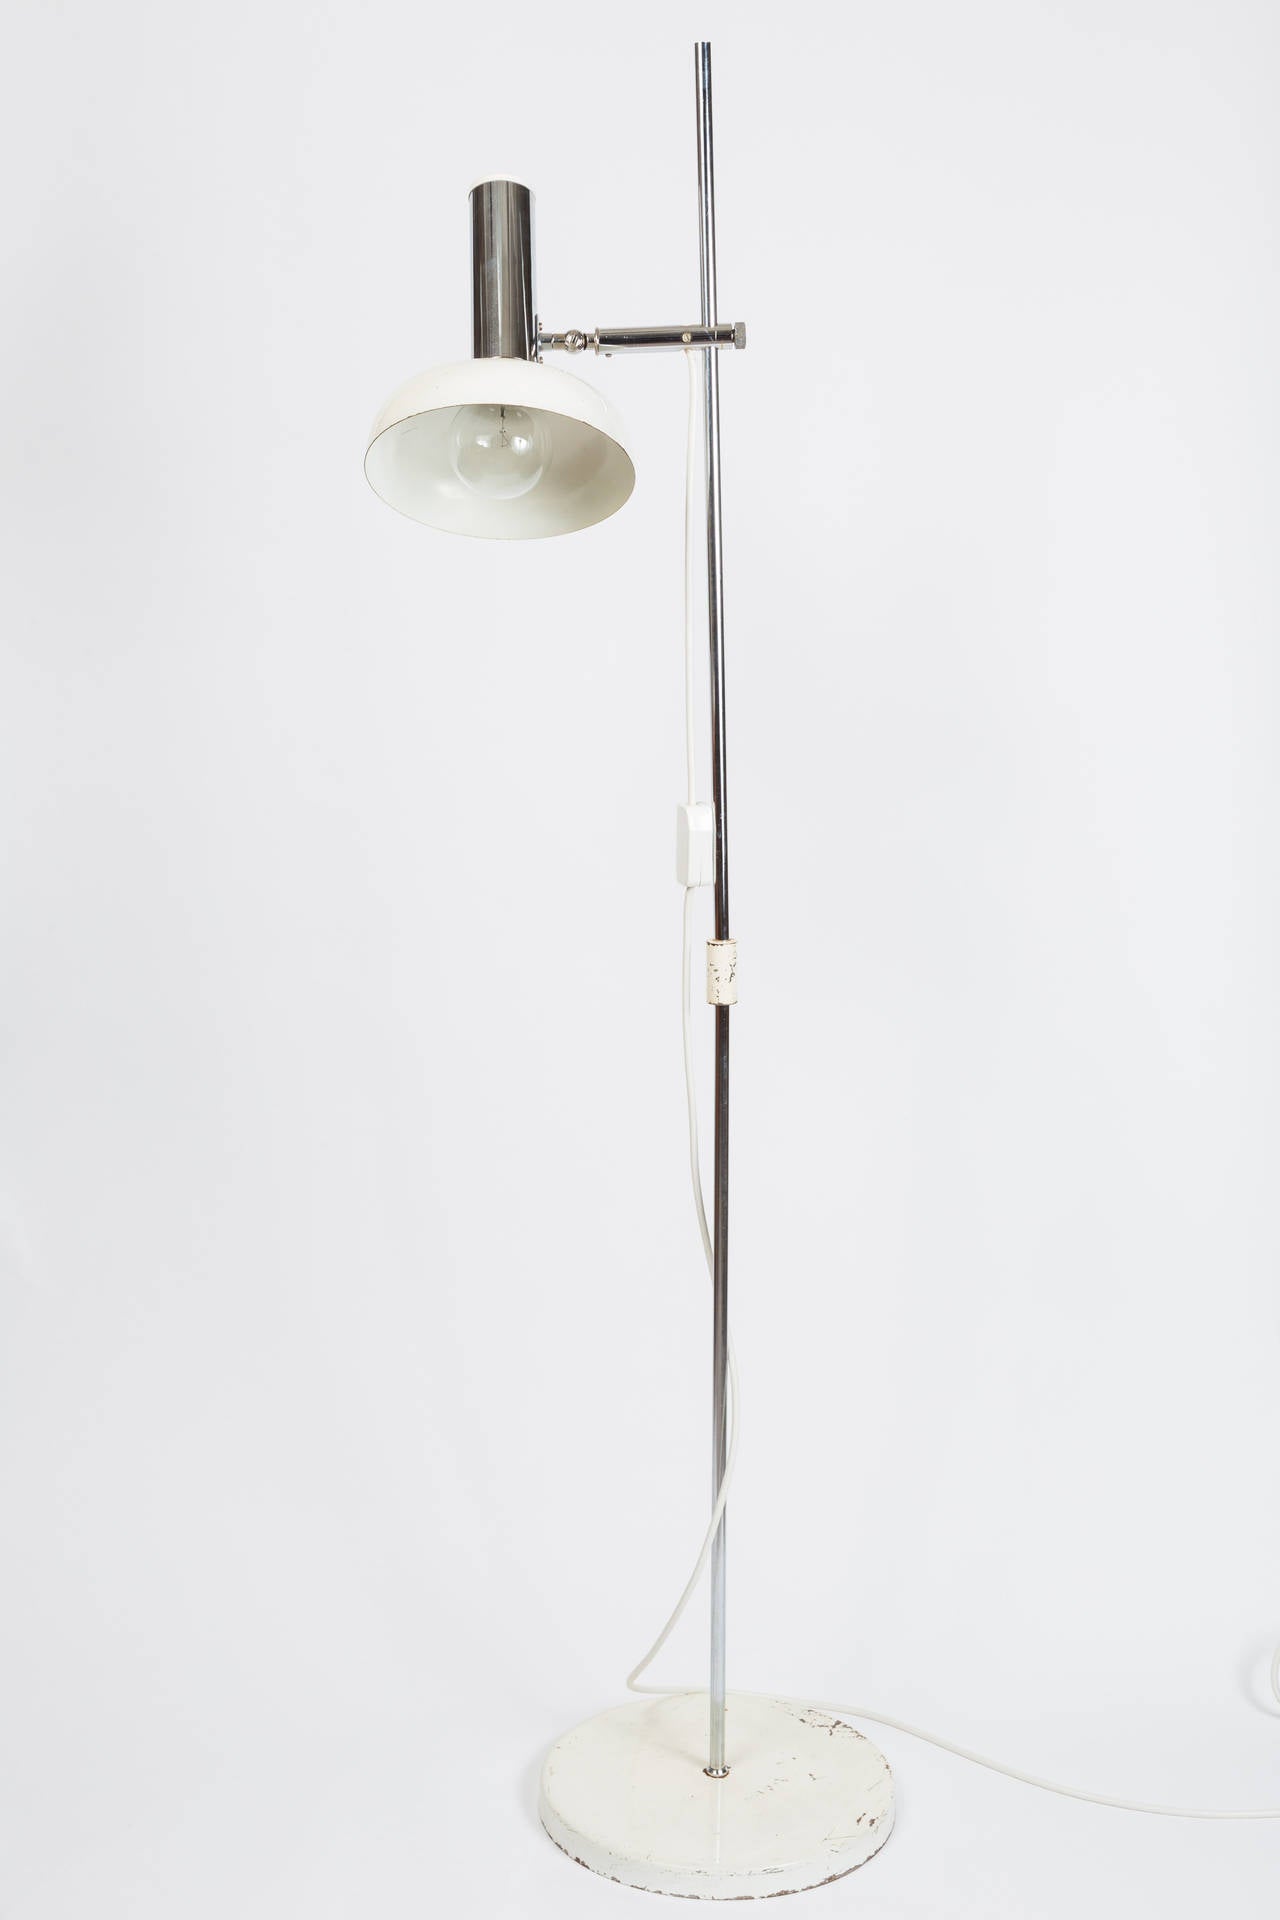 1960s Italian Floor Lamp in the Style of Gino Sarfatti For Sale 2